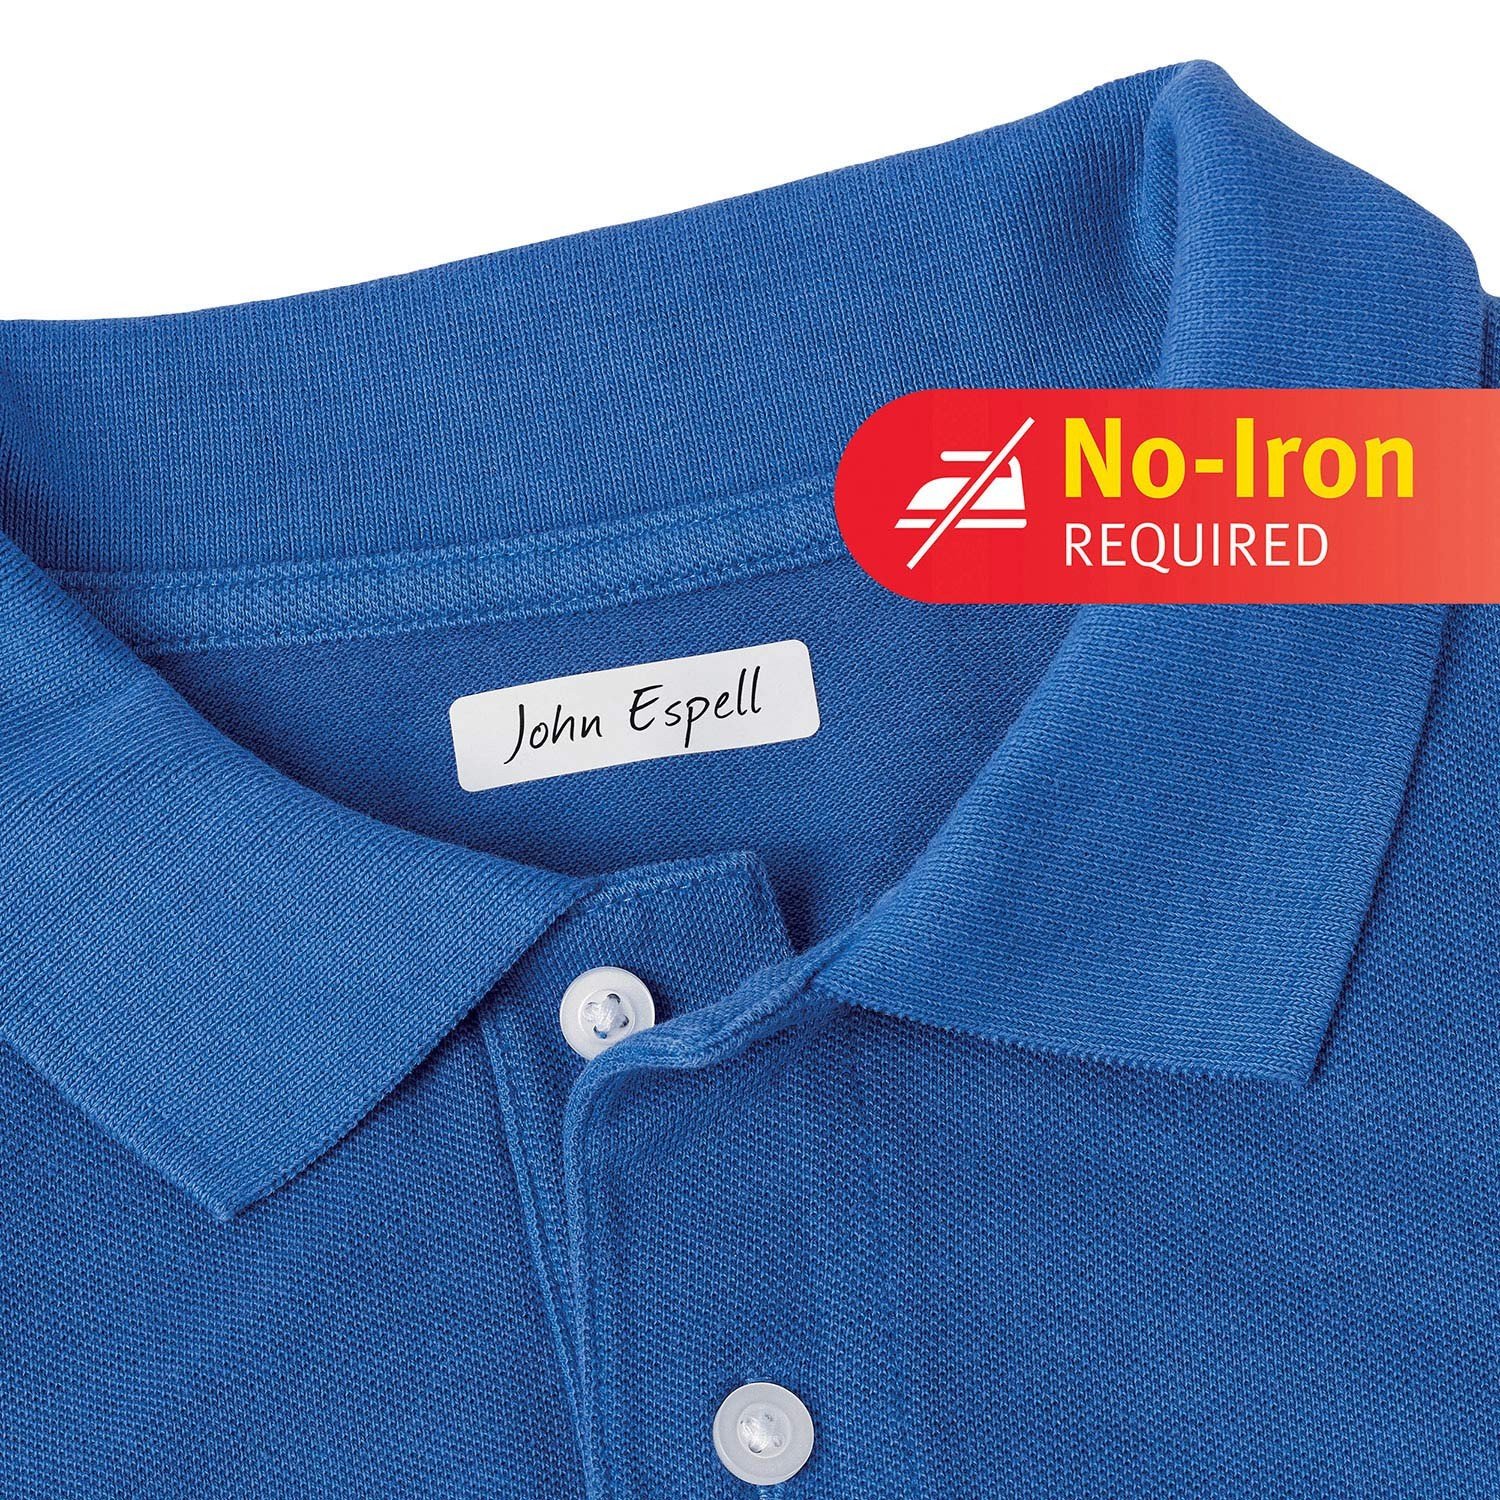 NoIron Fabric Labels 40720 Avery Australia